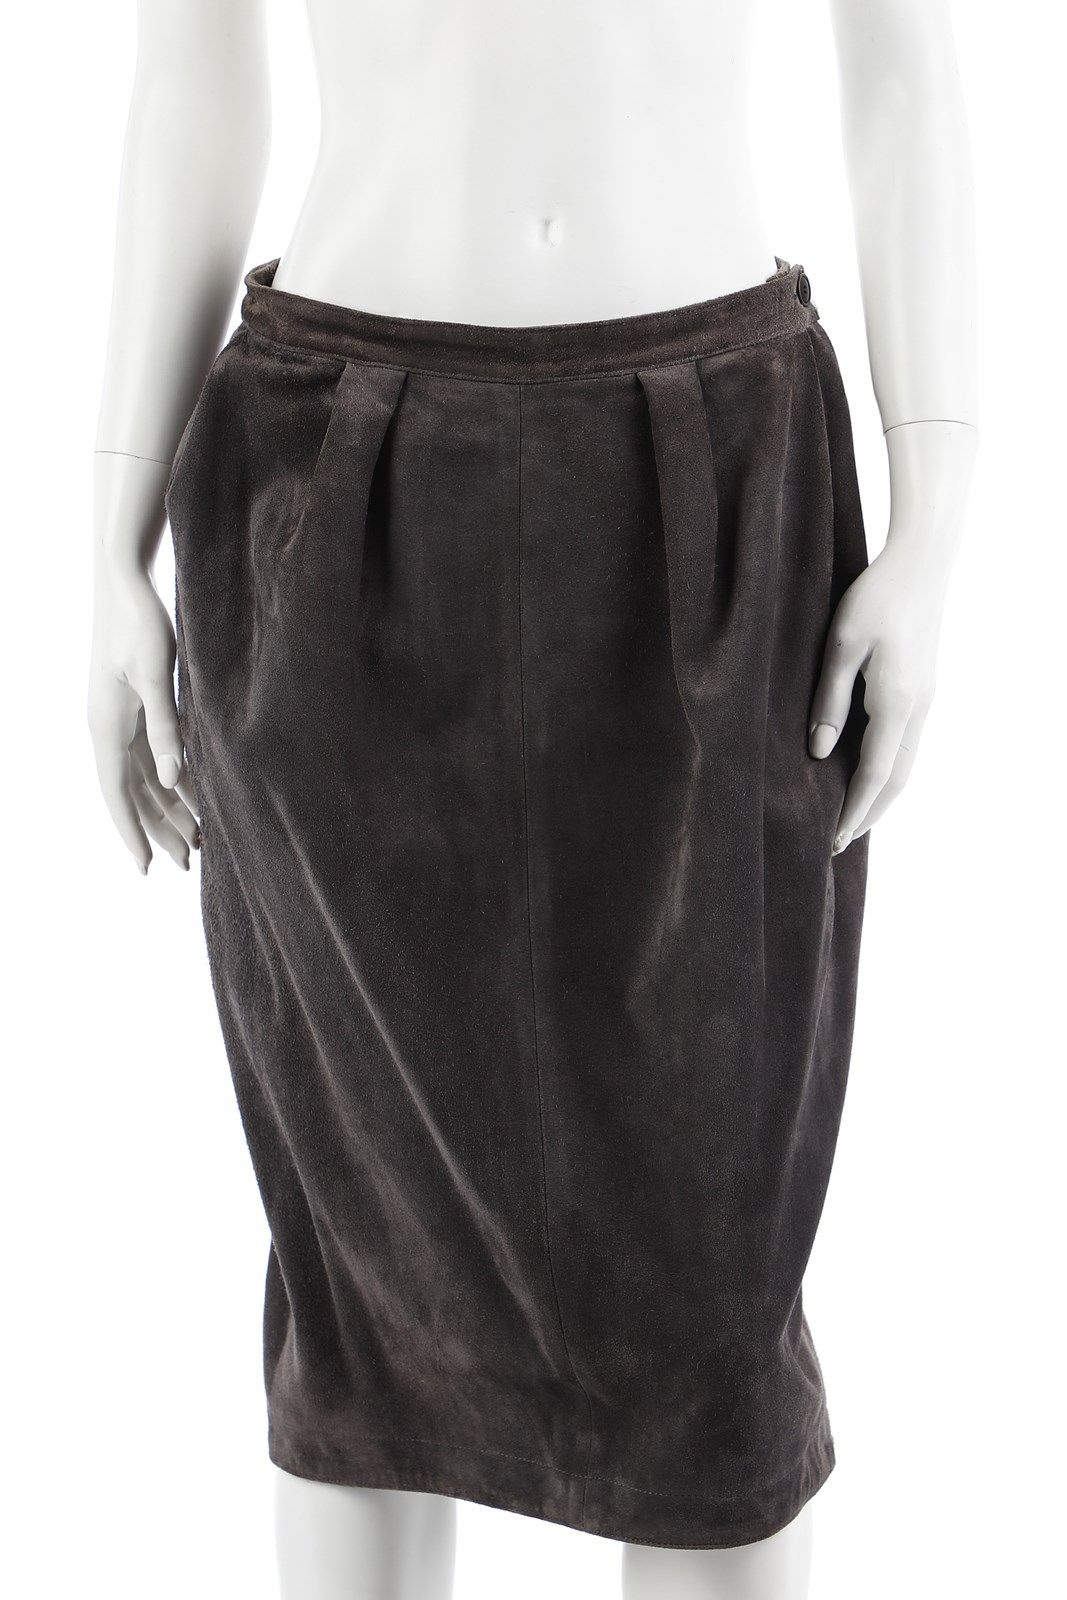 YVES SAINT LAURENT Gray suede leather midi skirt. Falda midi de piel de ante gri&hellip;